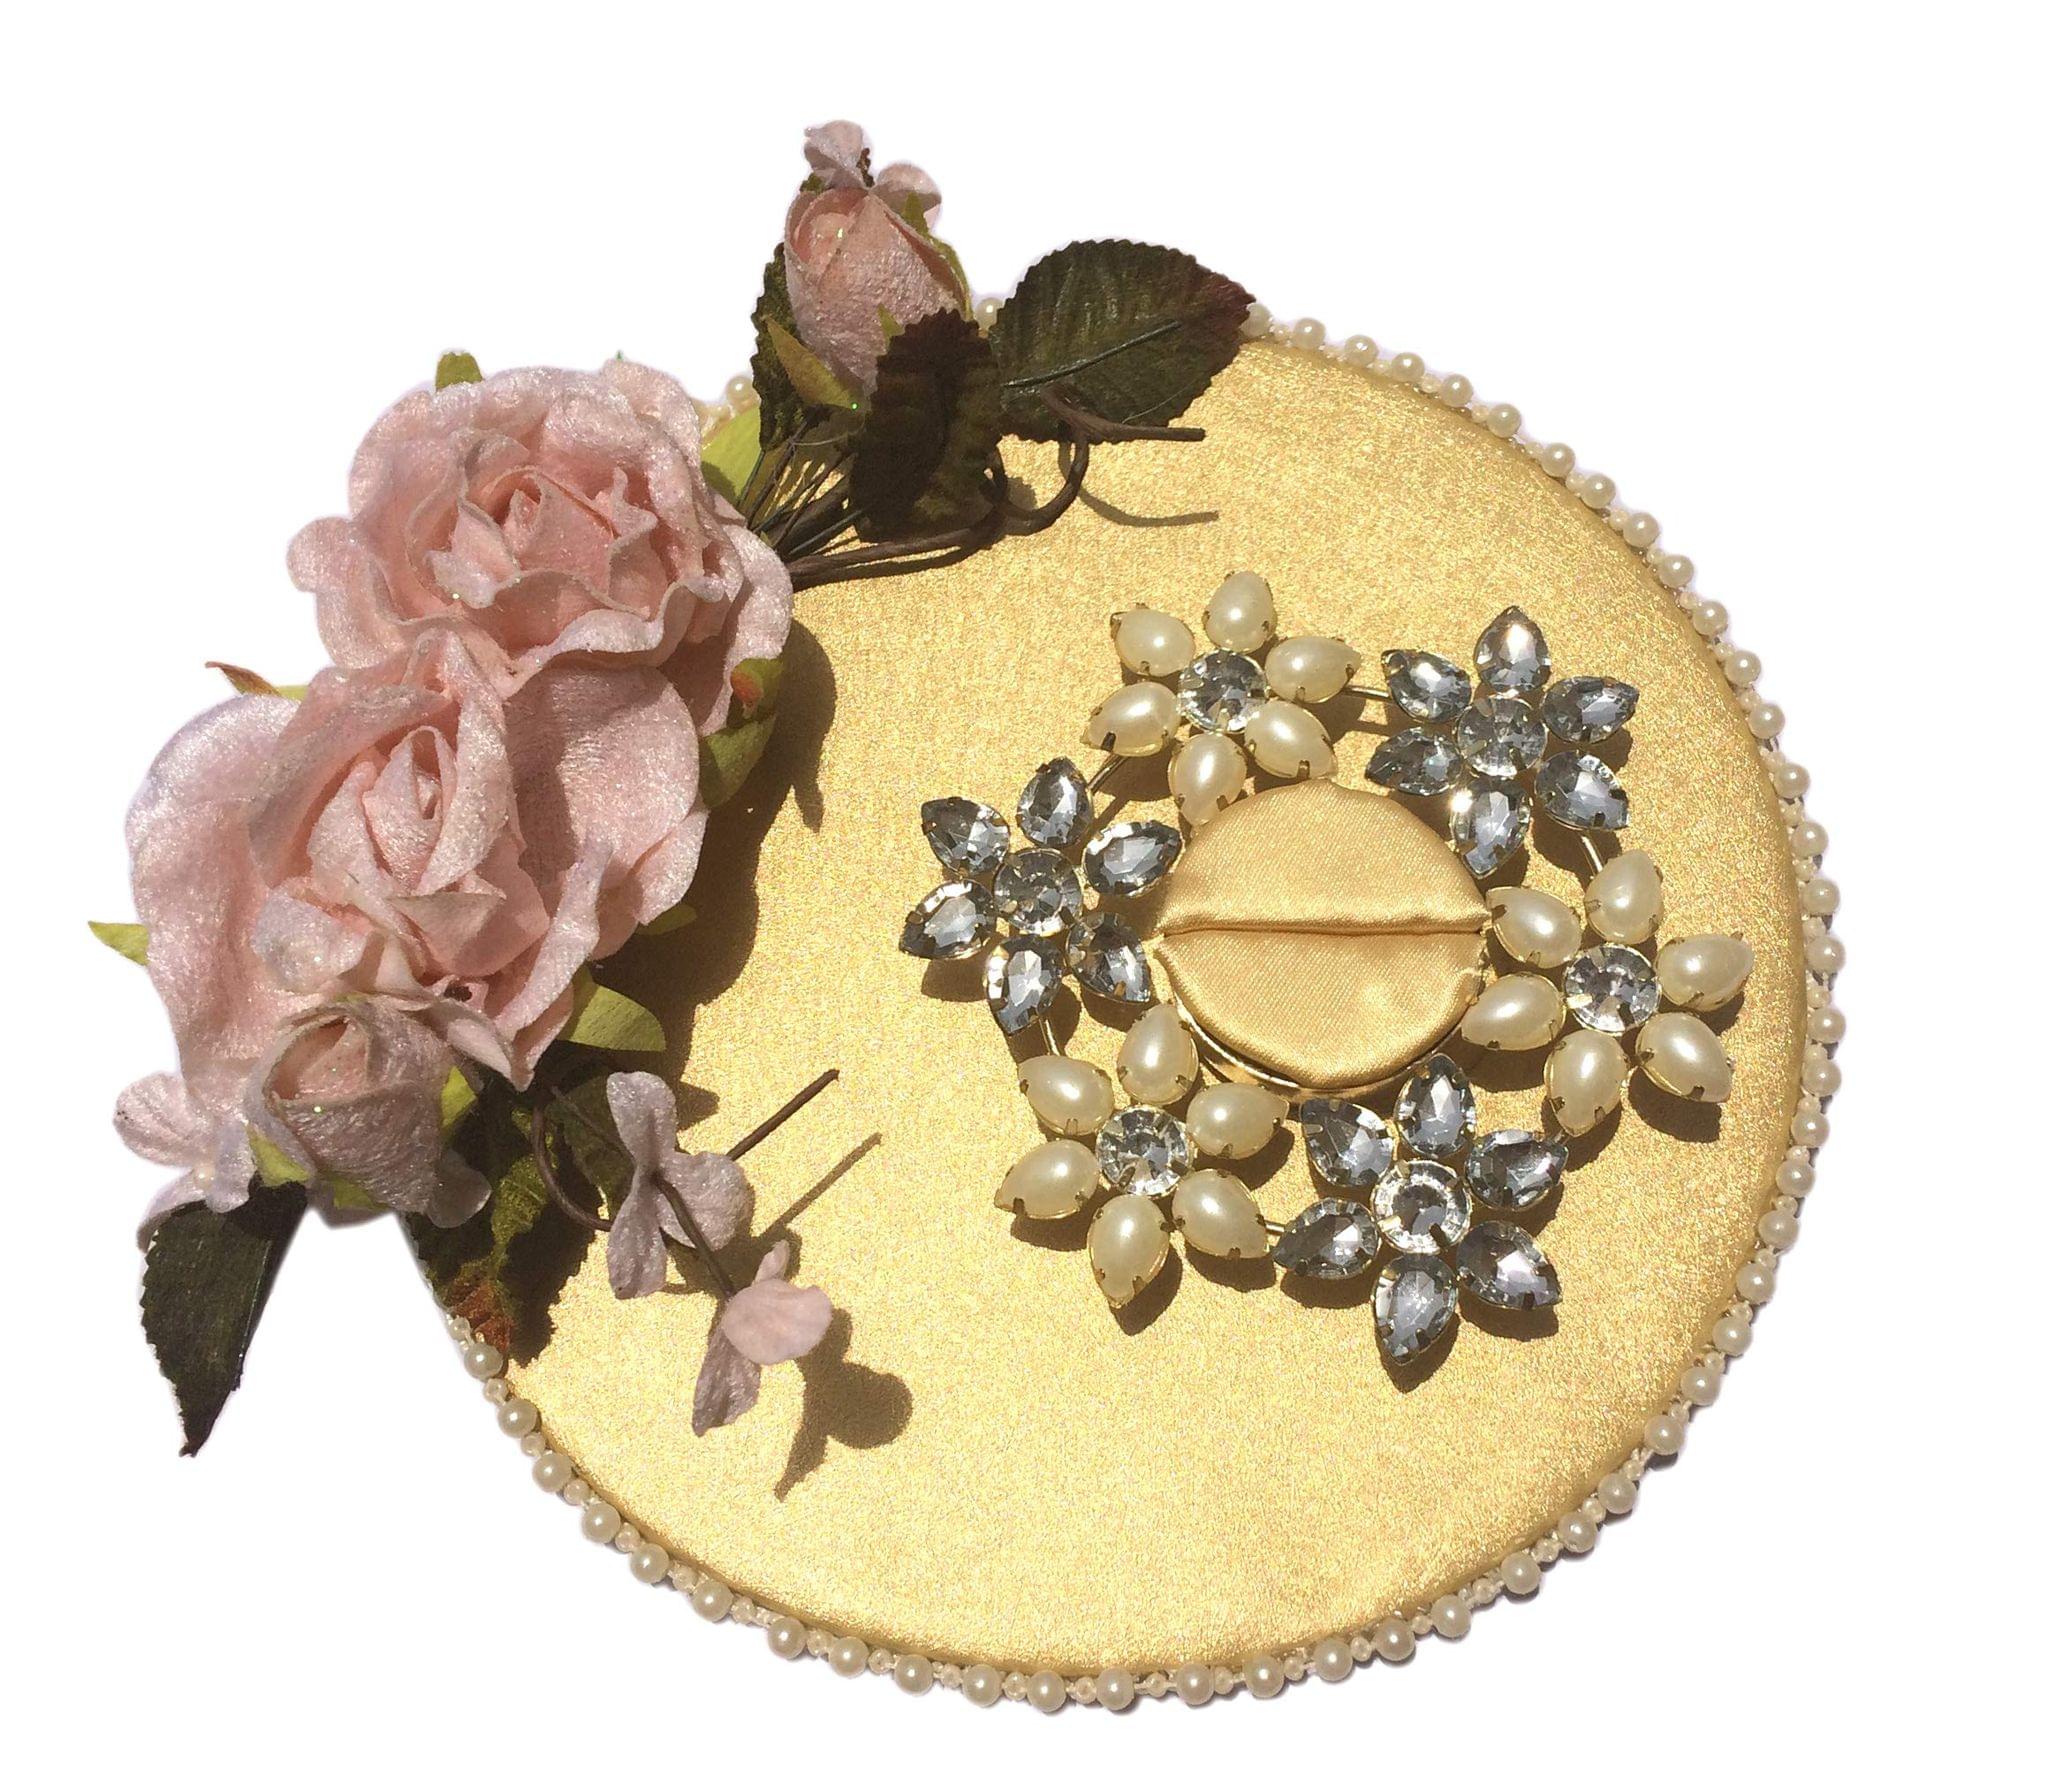 Engagement Ring Platter by layagift on DeviantArt